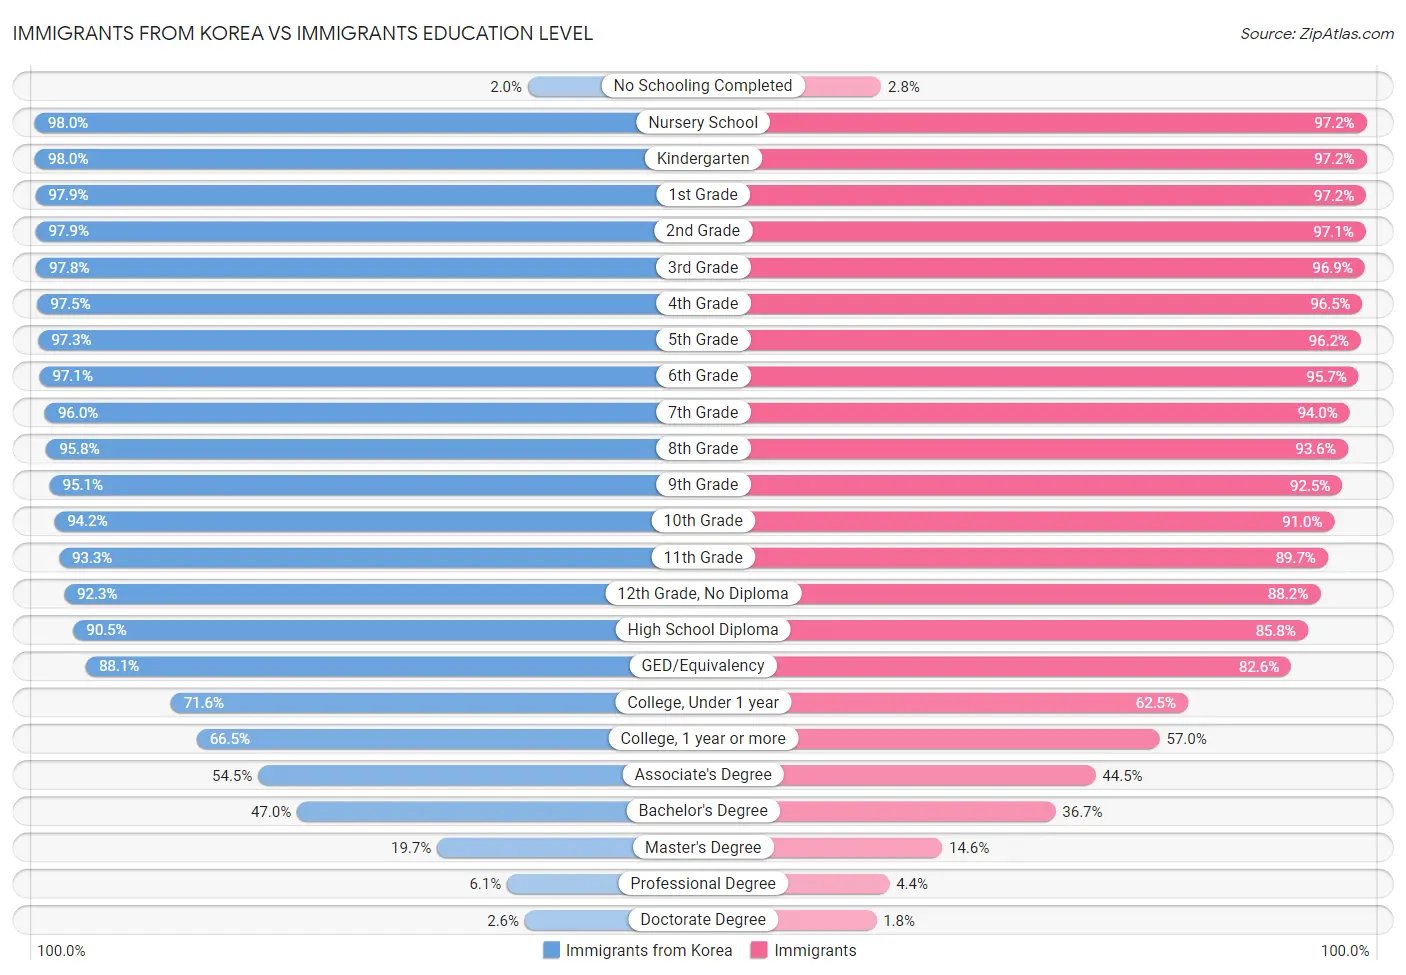 Immigrants from Korea vs Immigrants Education Level